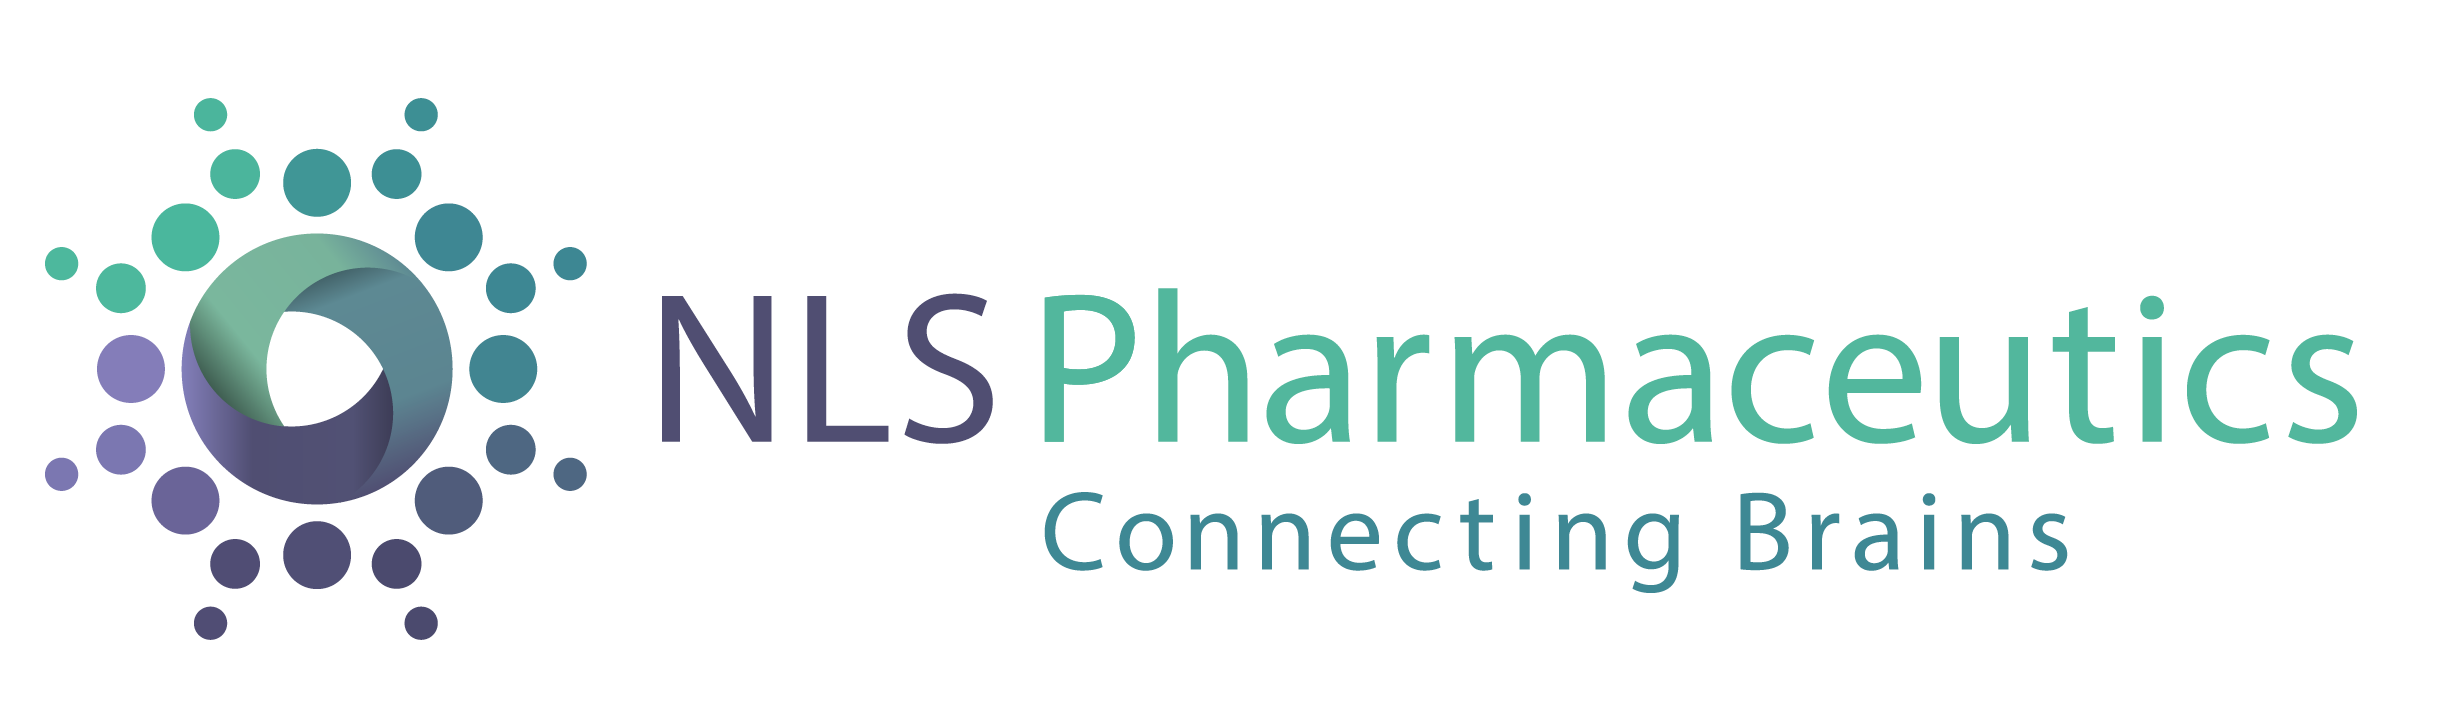 NLS Pharmaceutics AG, Wednesday, December 14, 2022, Press release picture